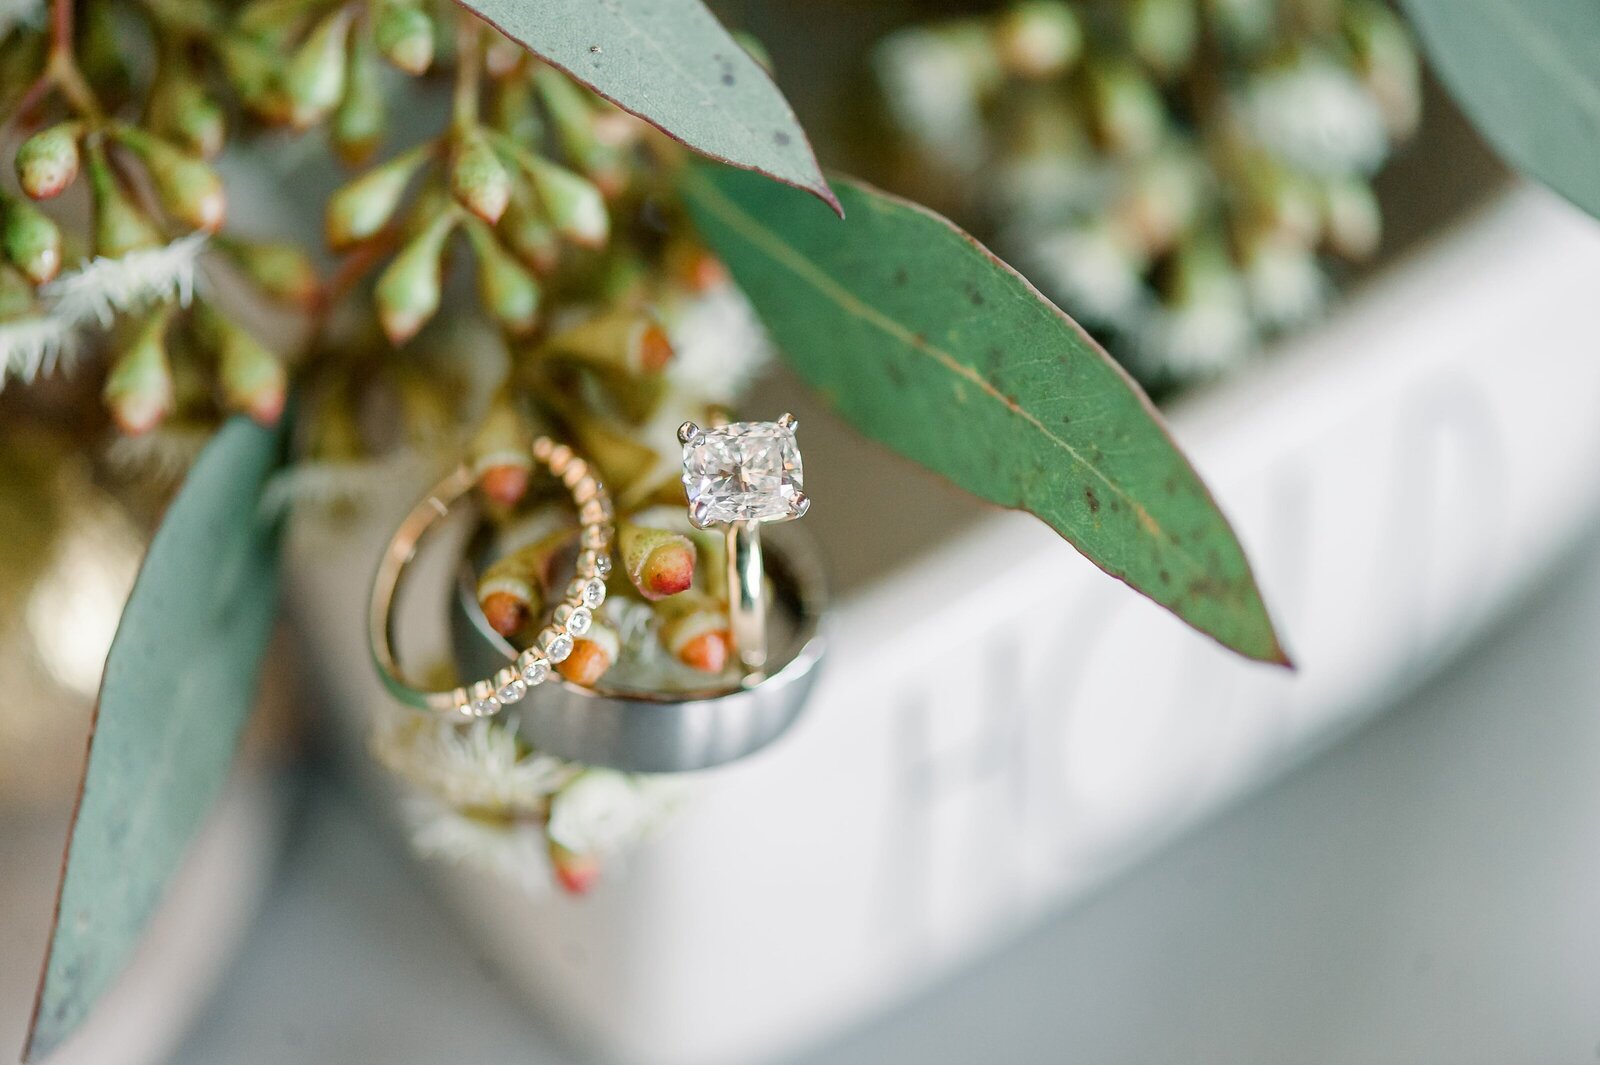 Wedding rings on eucalyptus seeds.